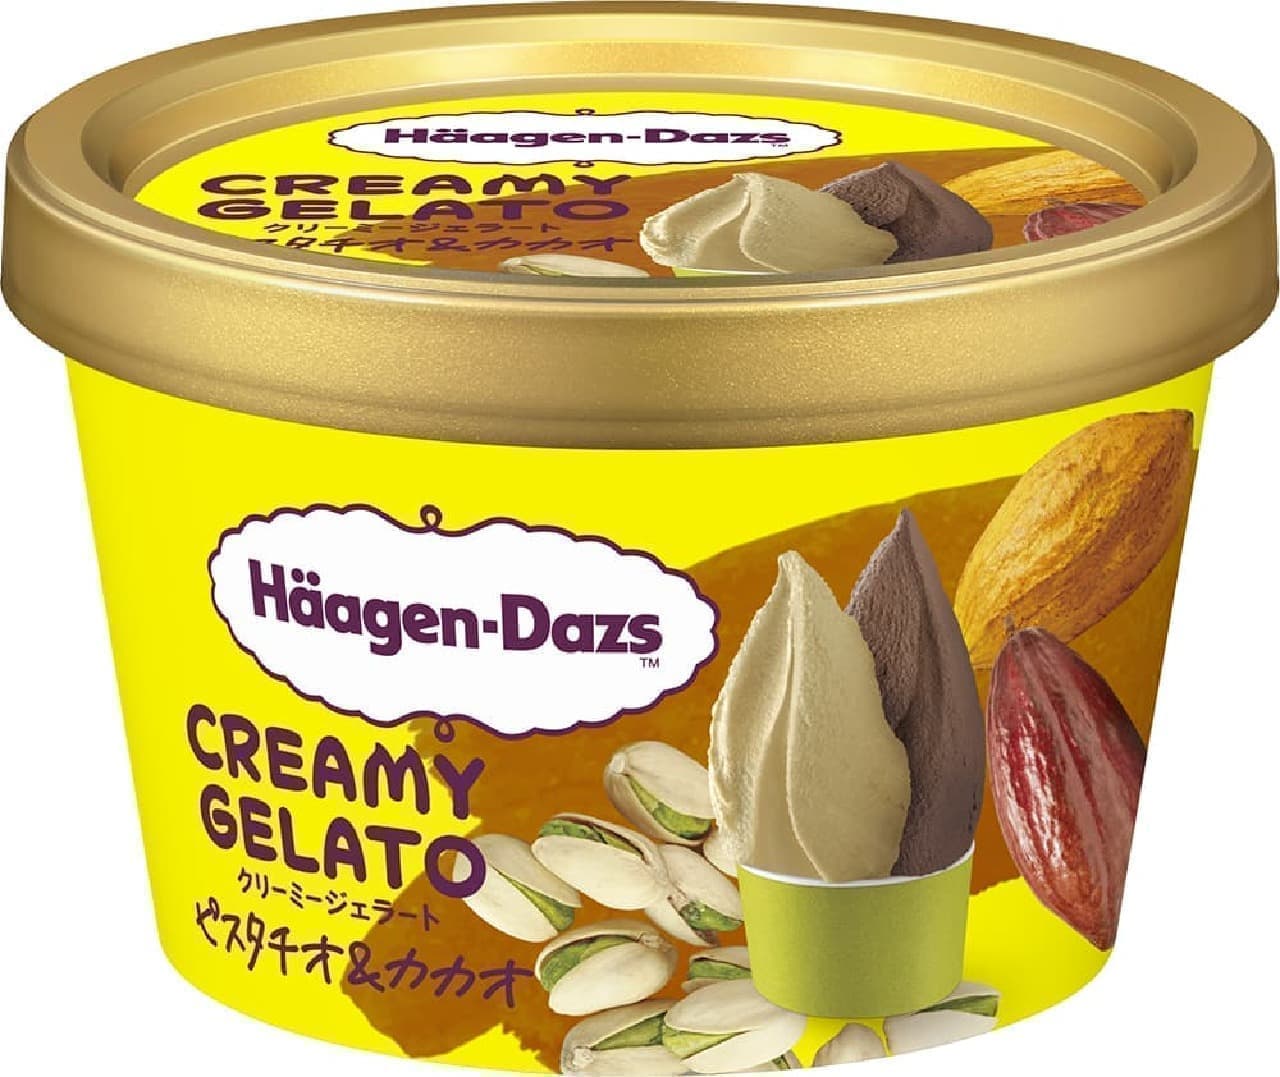 Haagen-Dazs Mini Cup CREAMY GELATO "Pistachio & Cacao